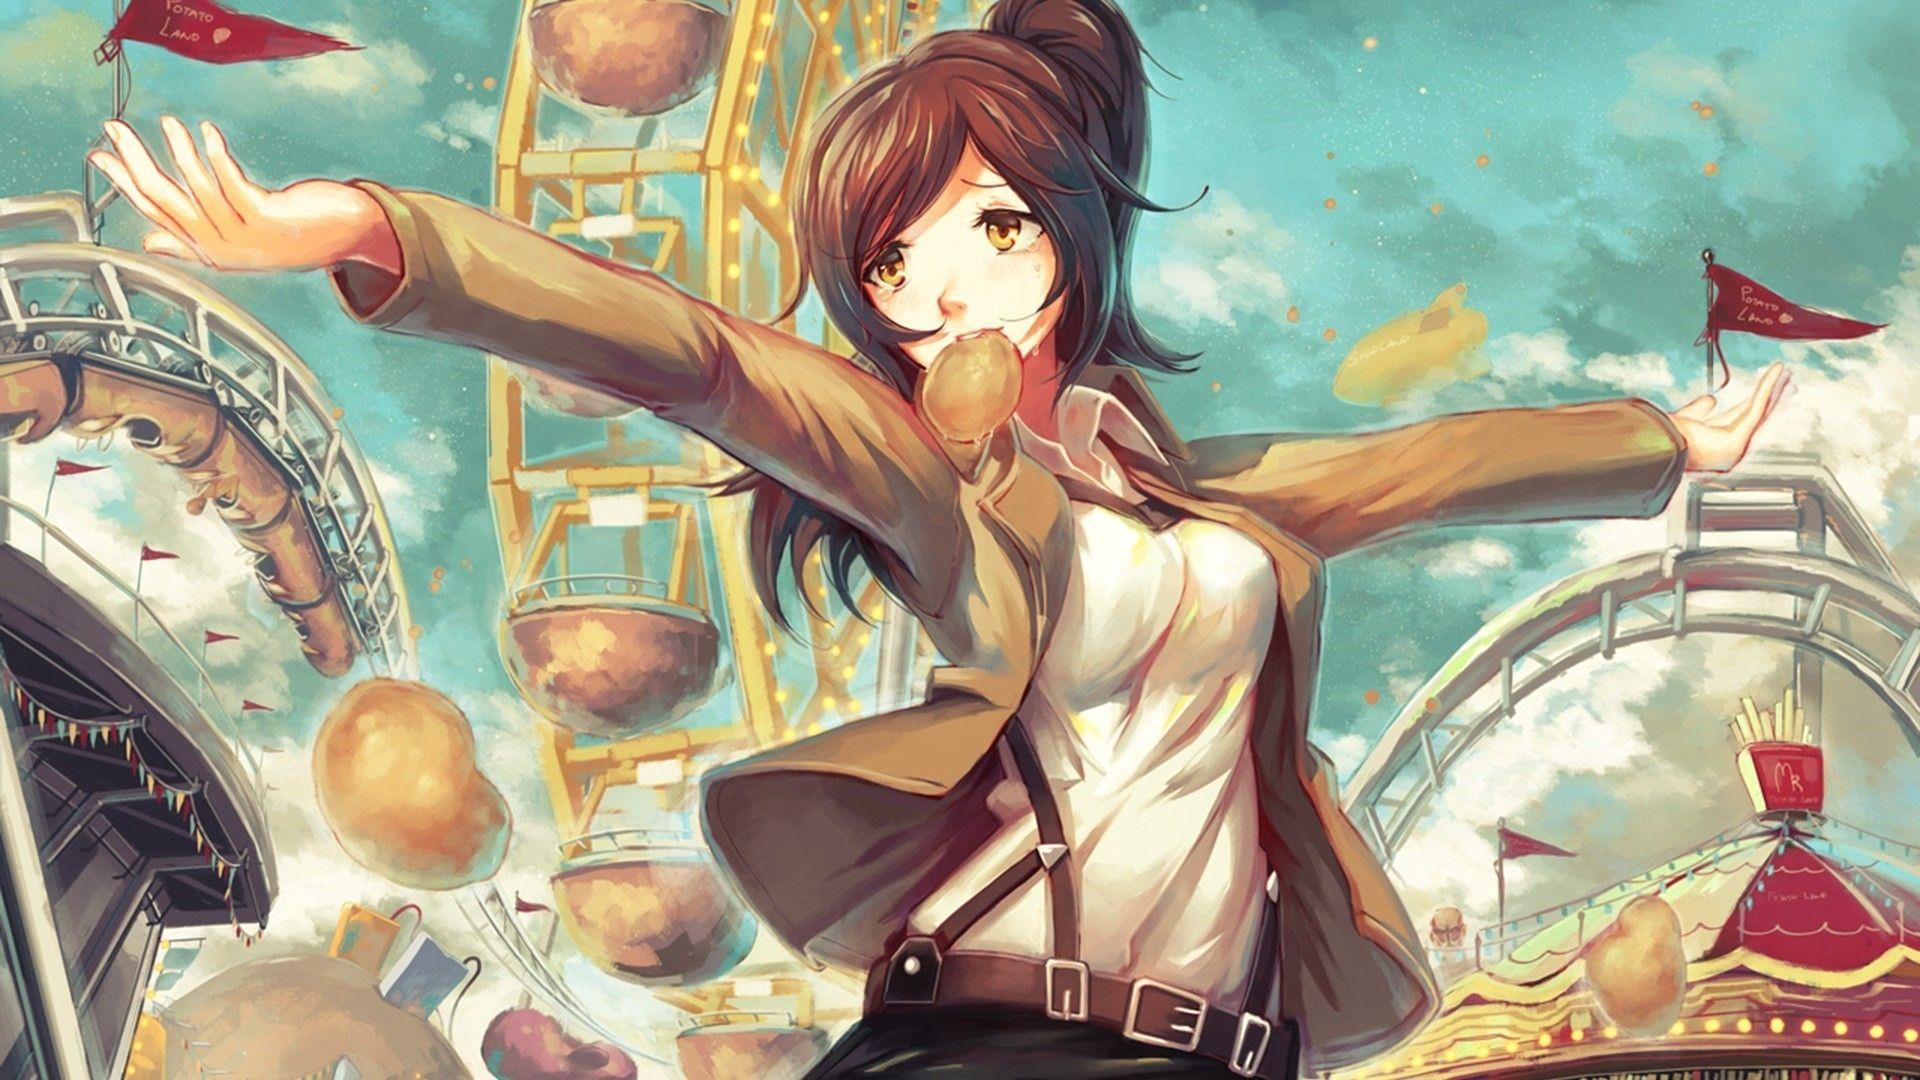 Sasha Braus on Titan wallpaper. Anime, Cartoon wallpaper, Anime art